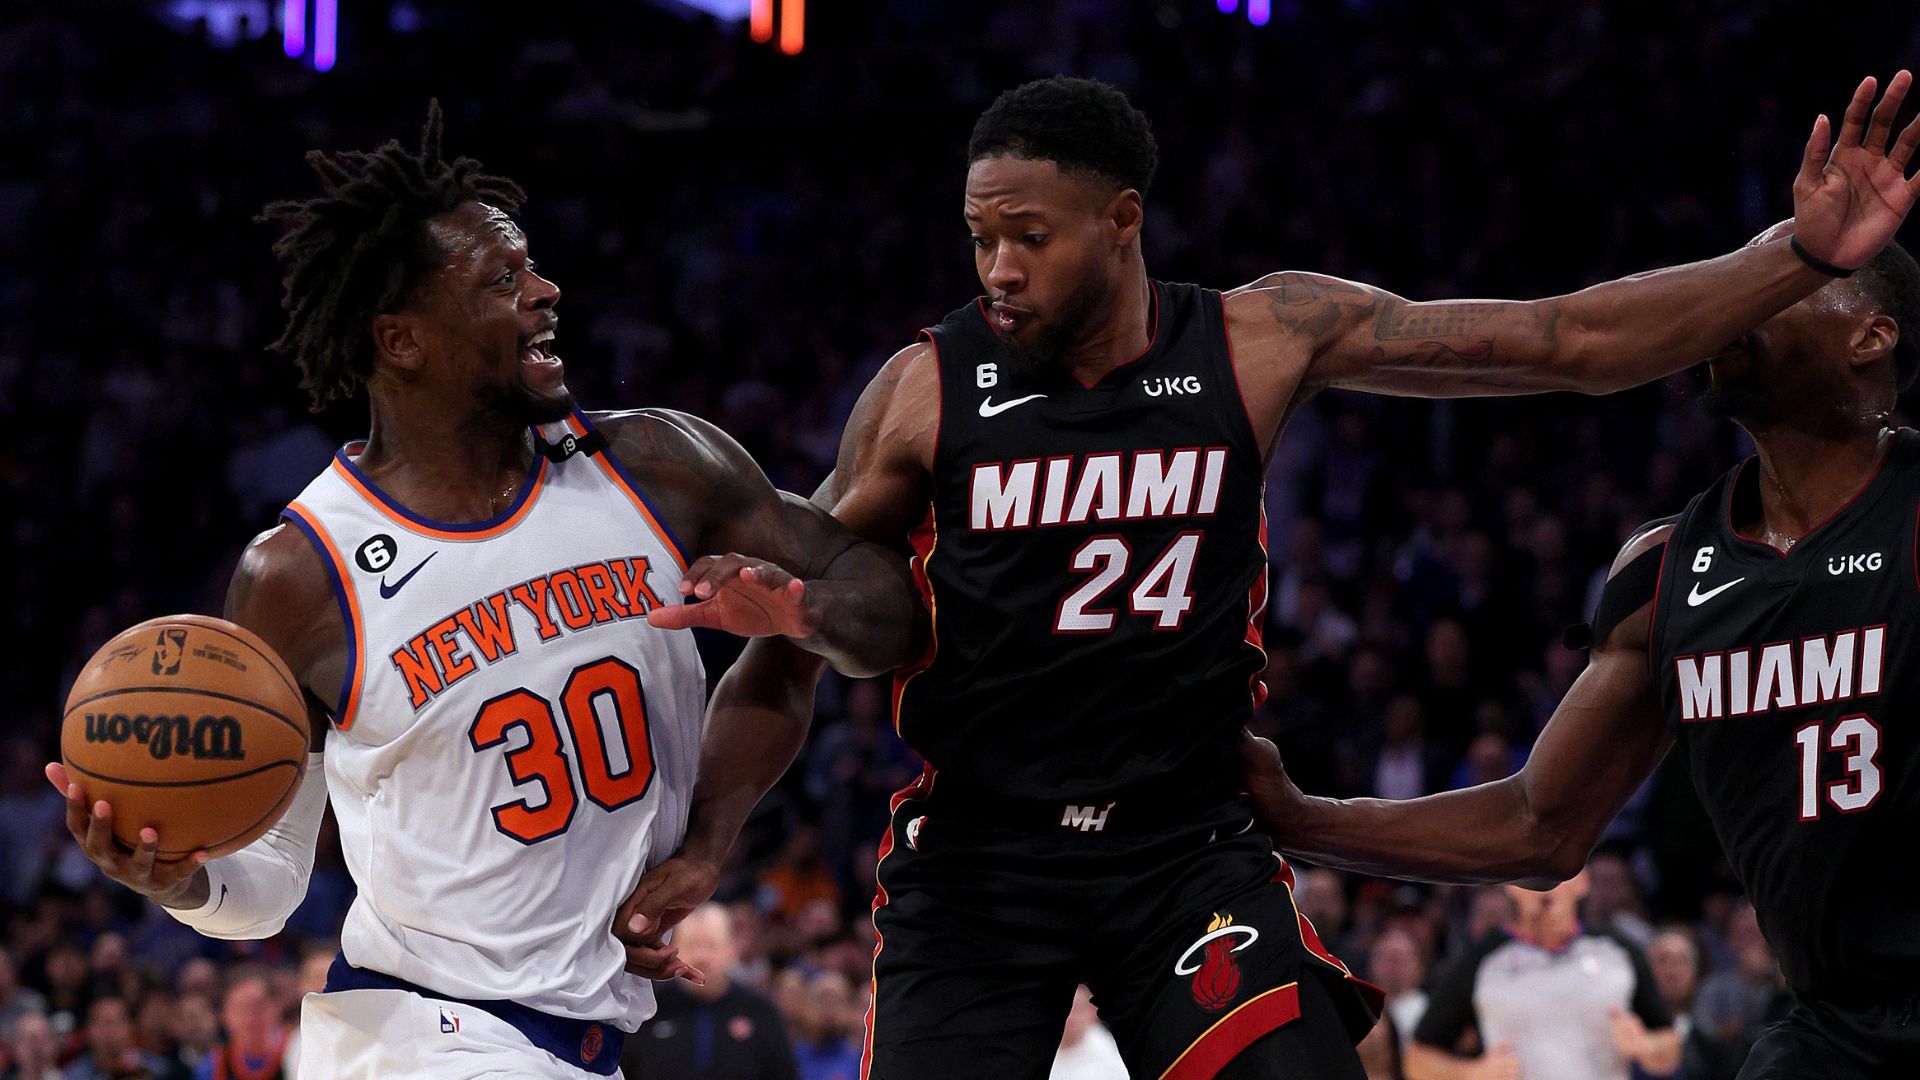 Miami Heat defeats the New York Knicks in the NBA